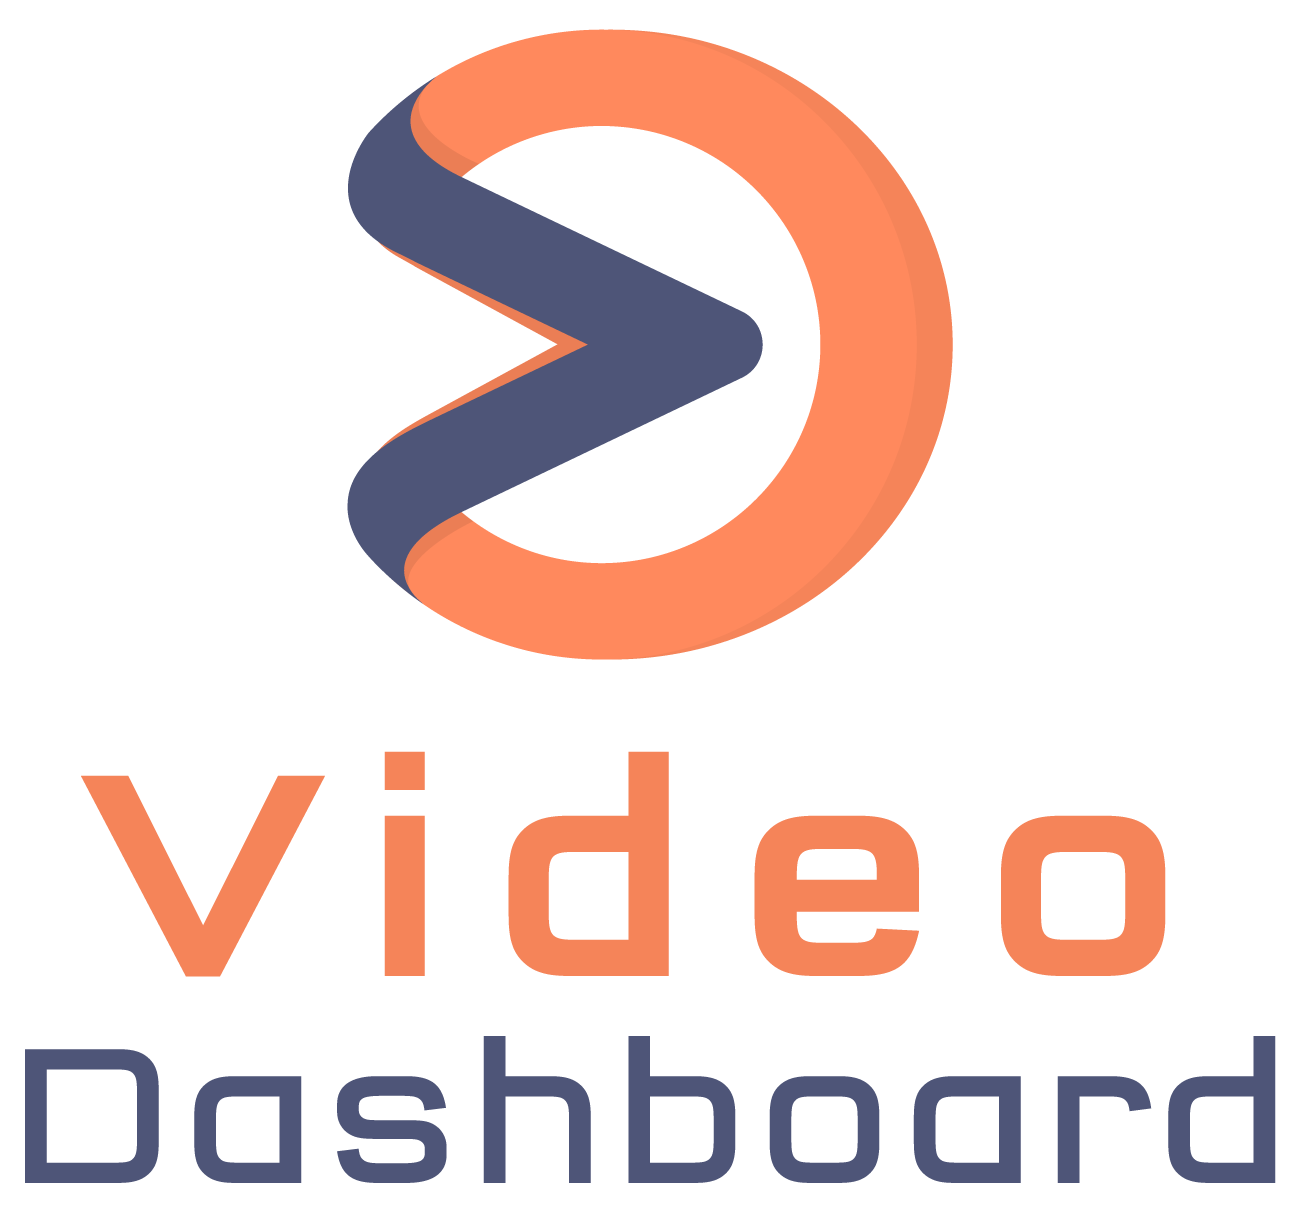 Video Dashboard app